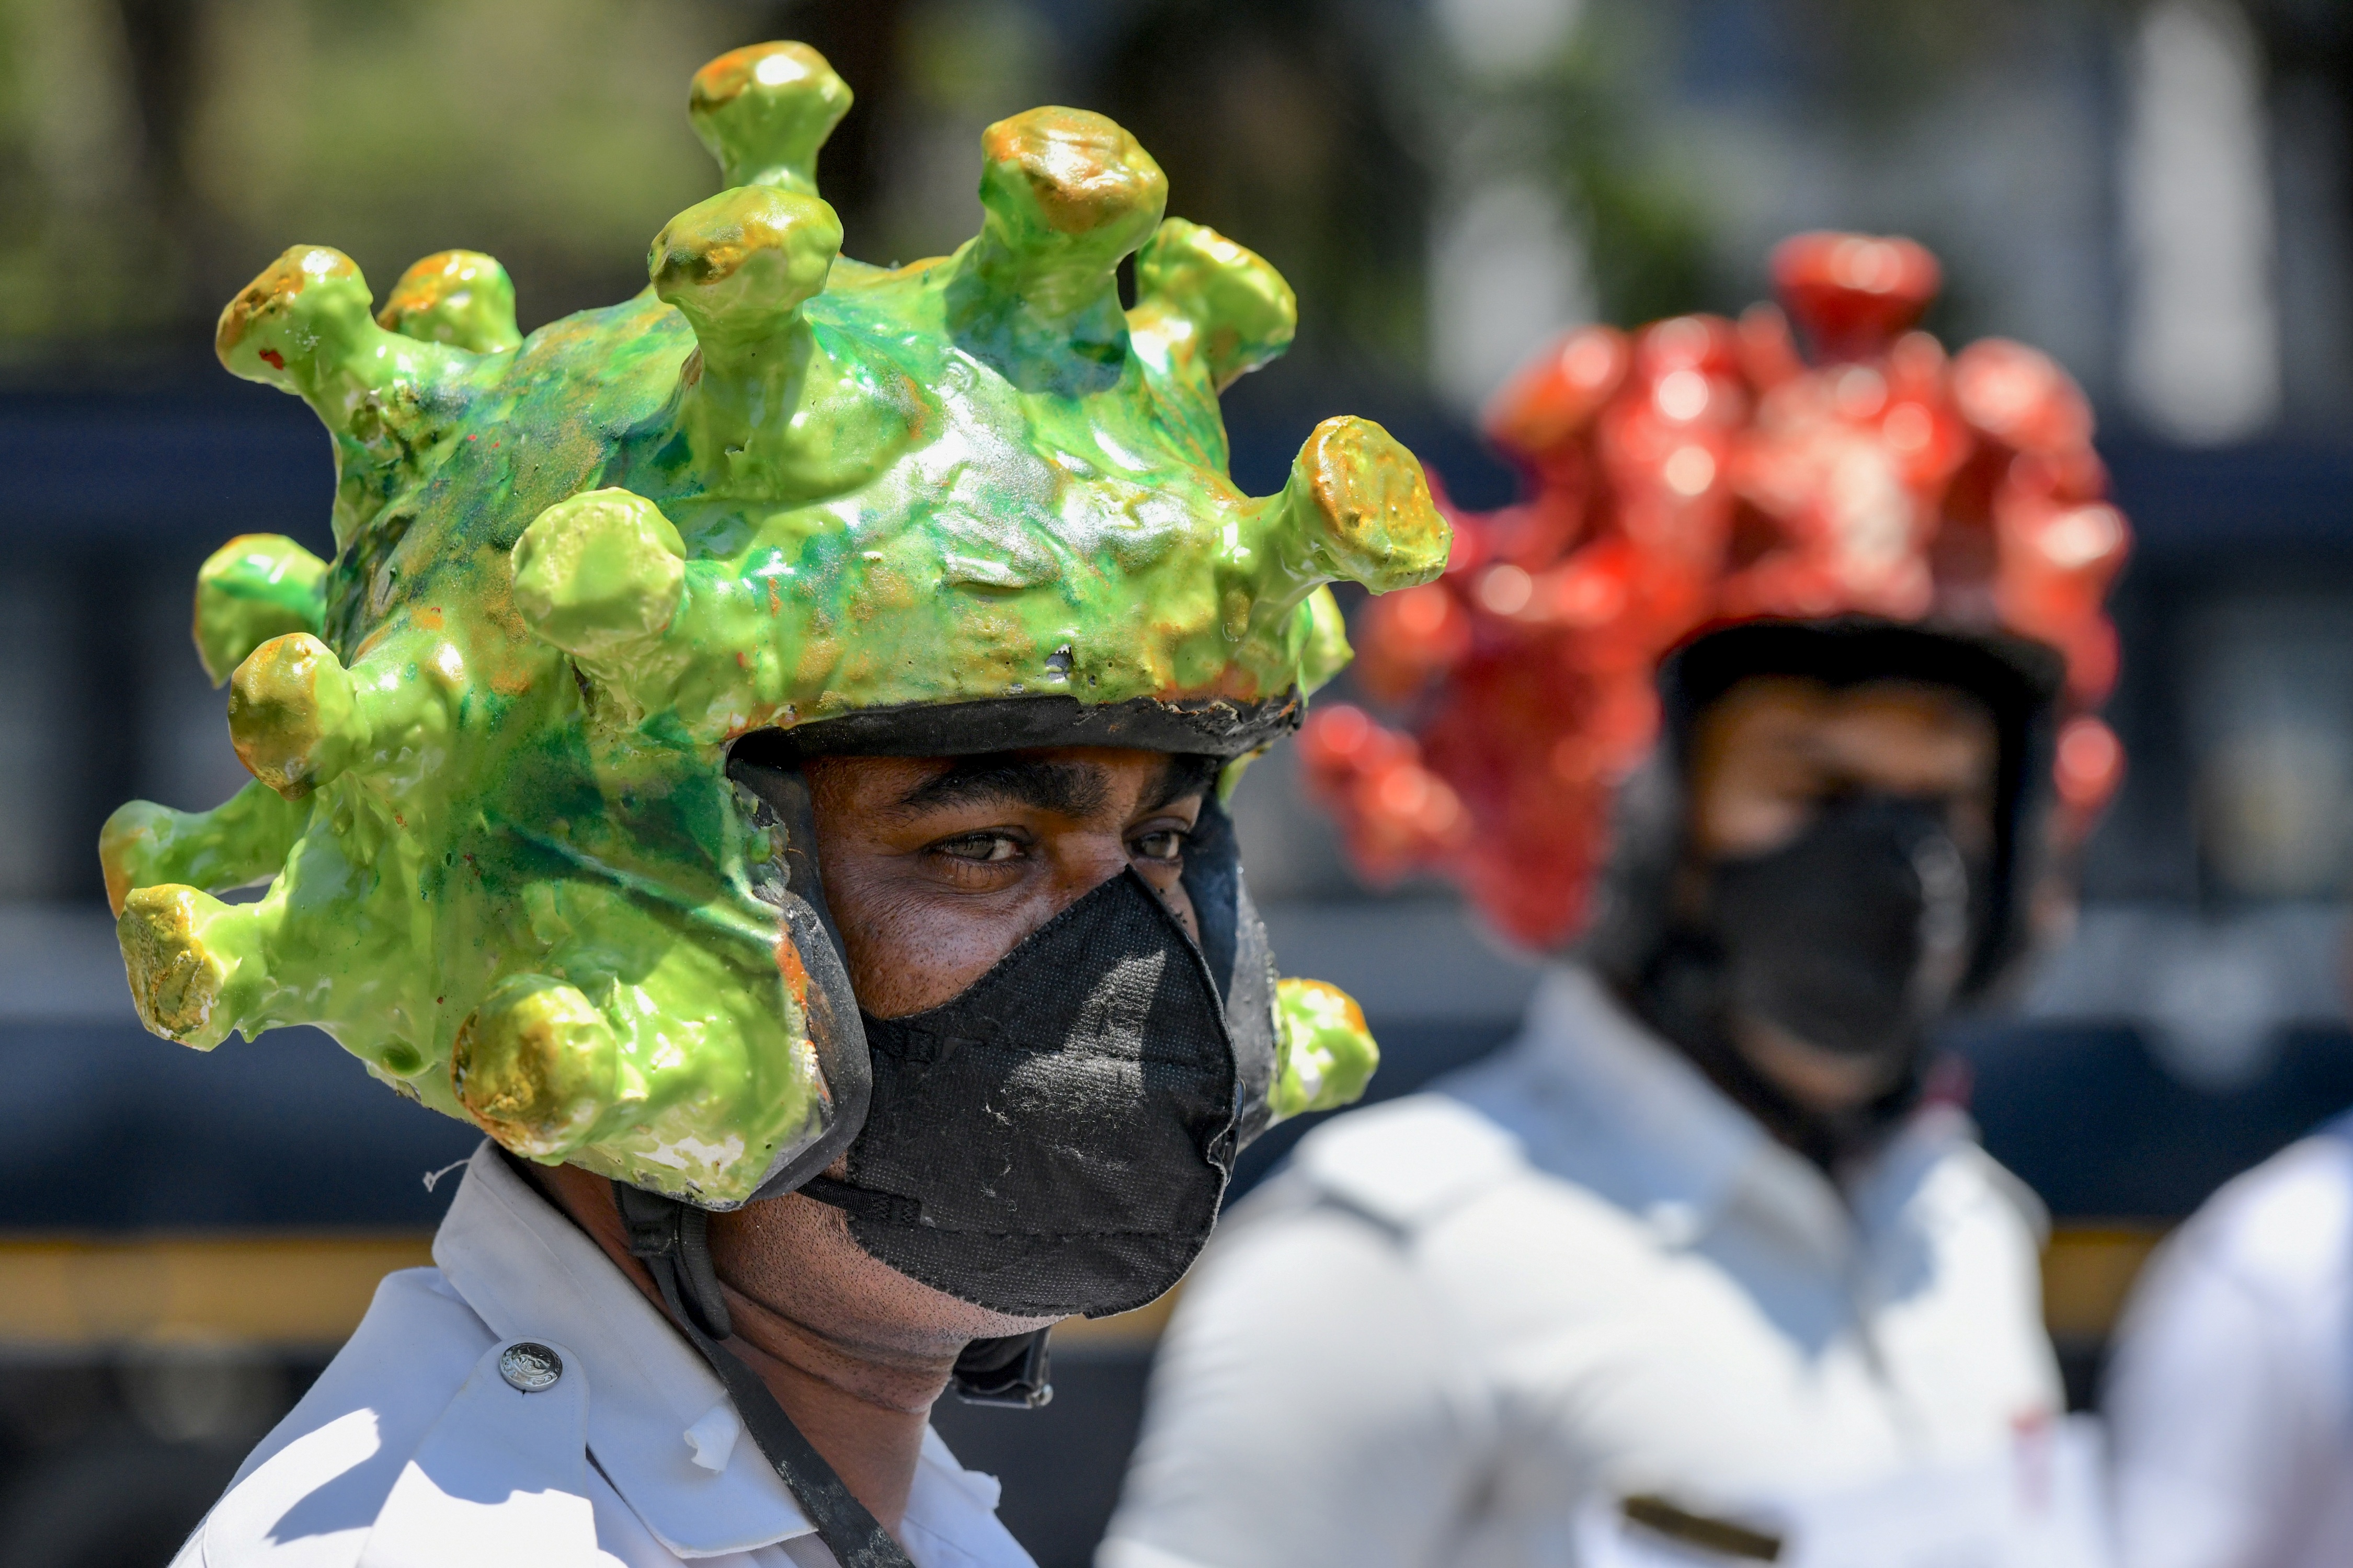 Люди едят в масках. Индийский полицейский. Маска от коронавируса. Индийские полицейские в костюме коронавируса. Костюм коронавируса карнавальный.